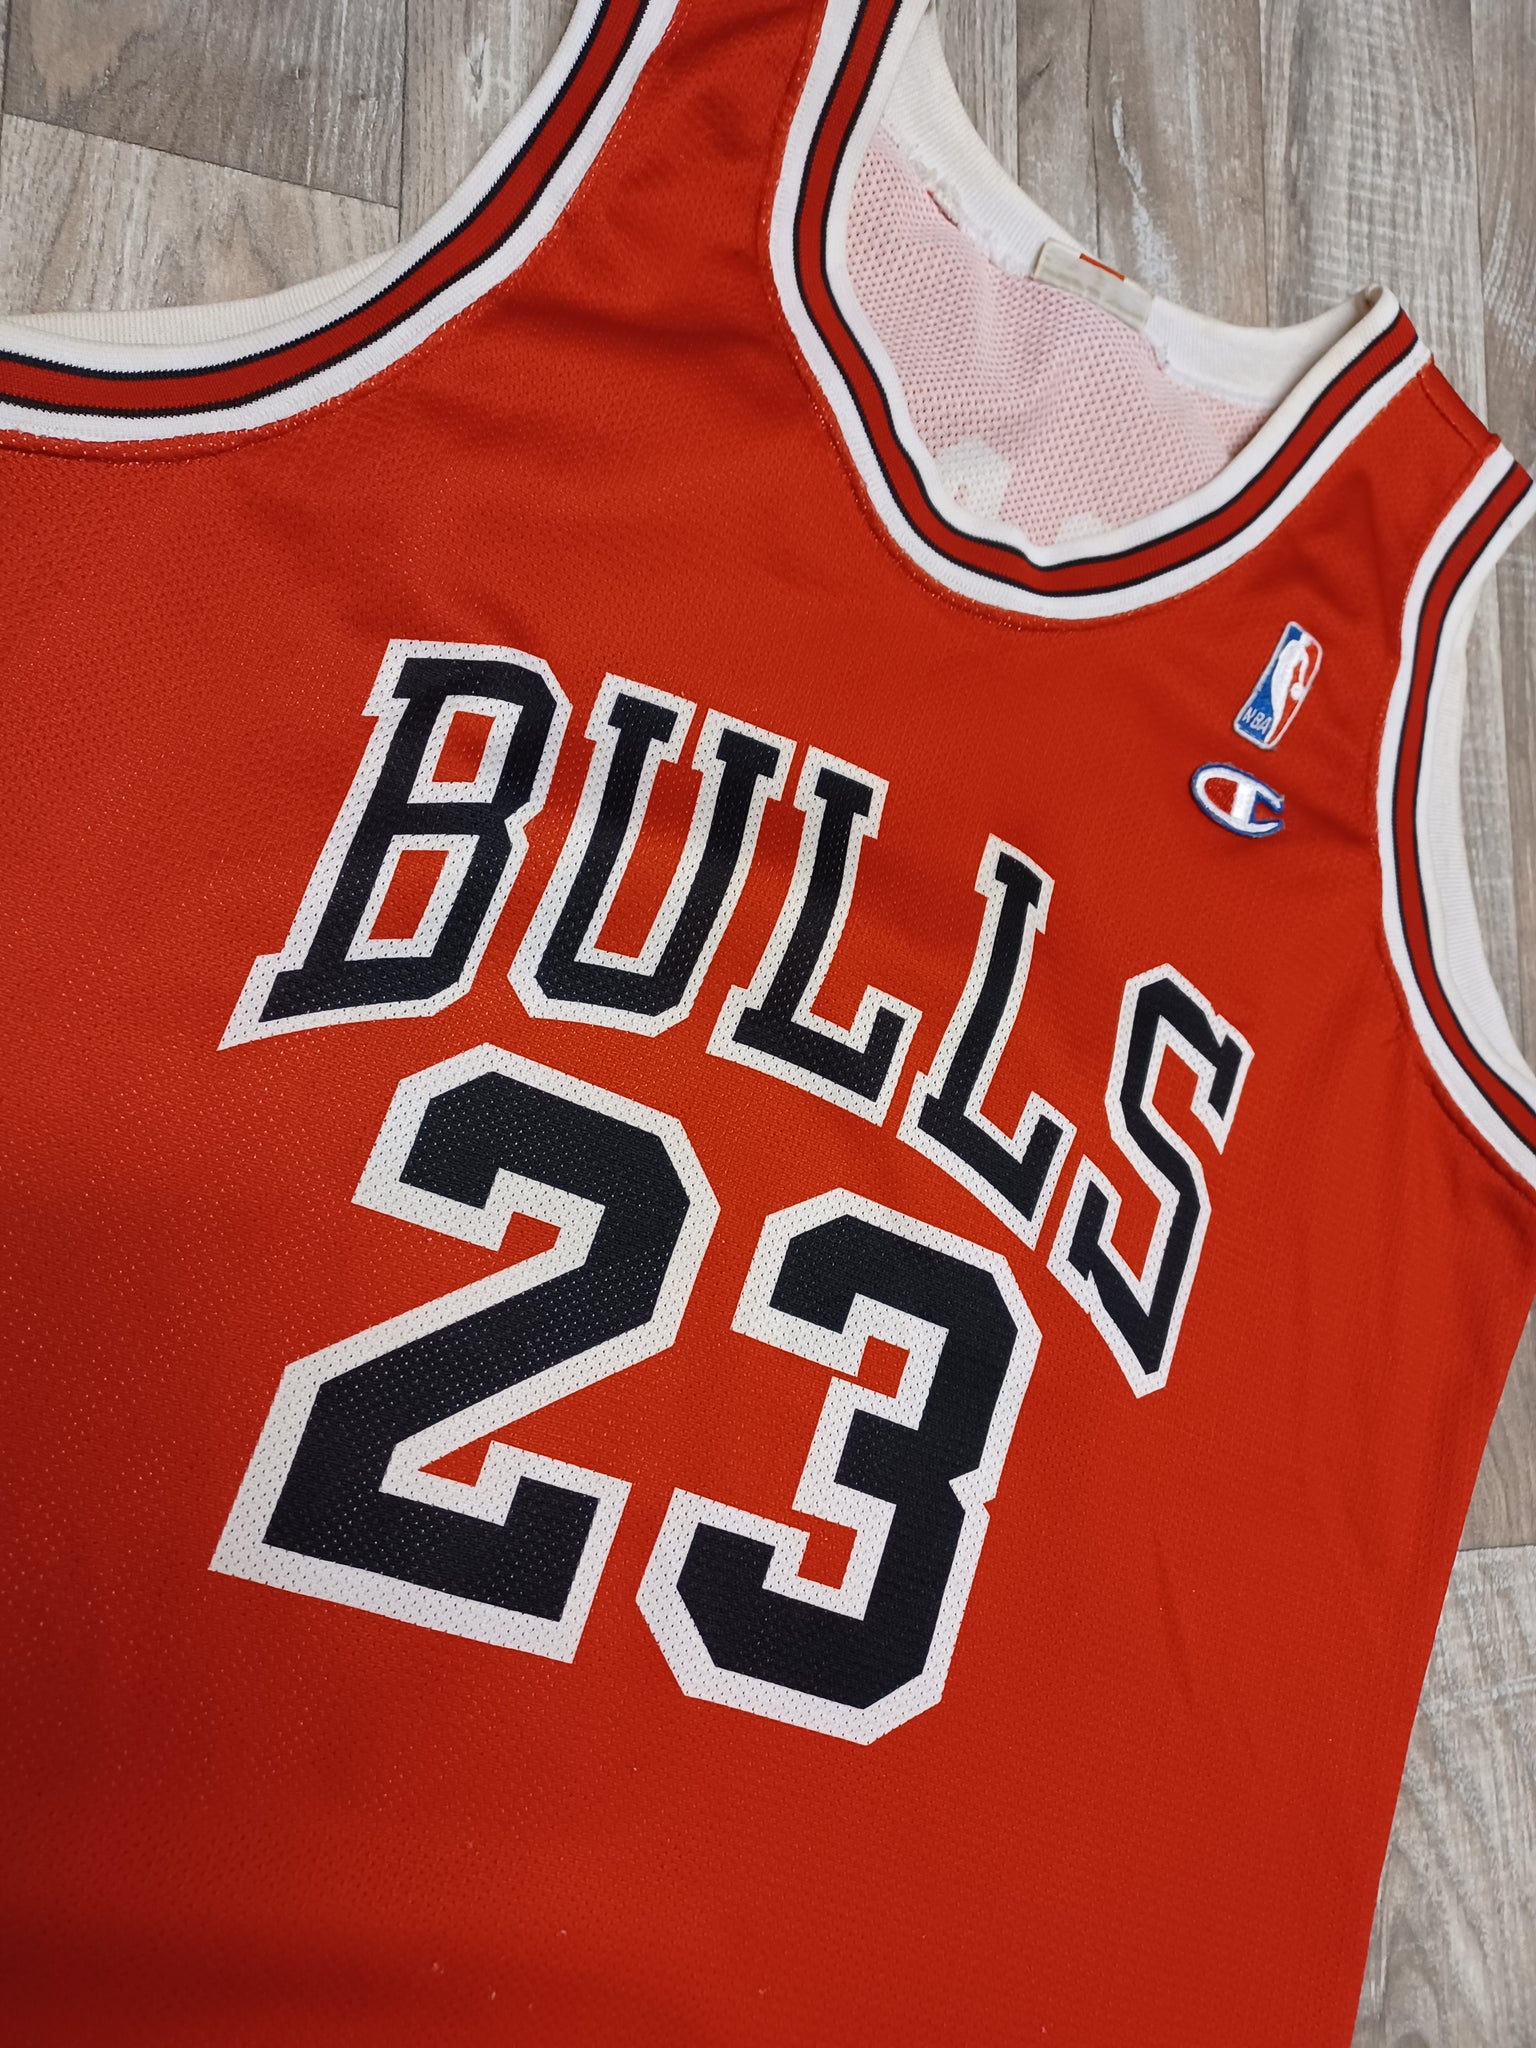 🏀 Michael Jordan Chicago Bulls Jersey Size XL – The Throwback